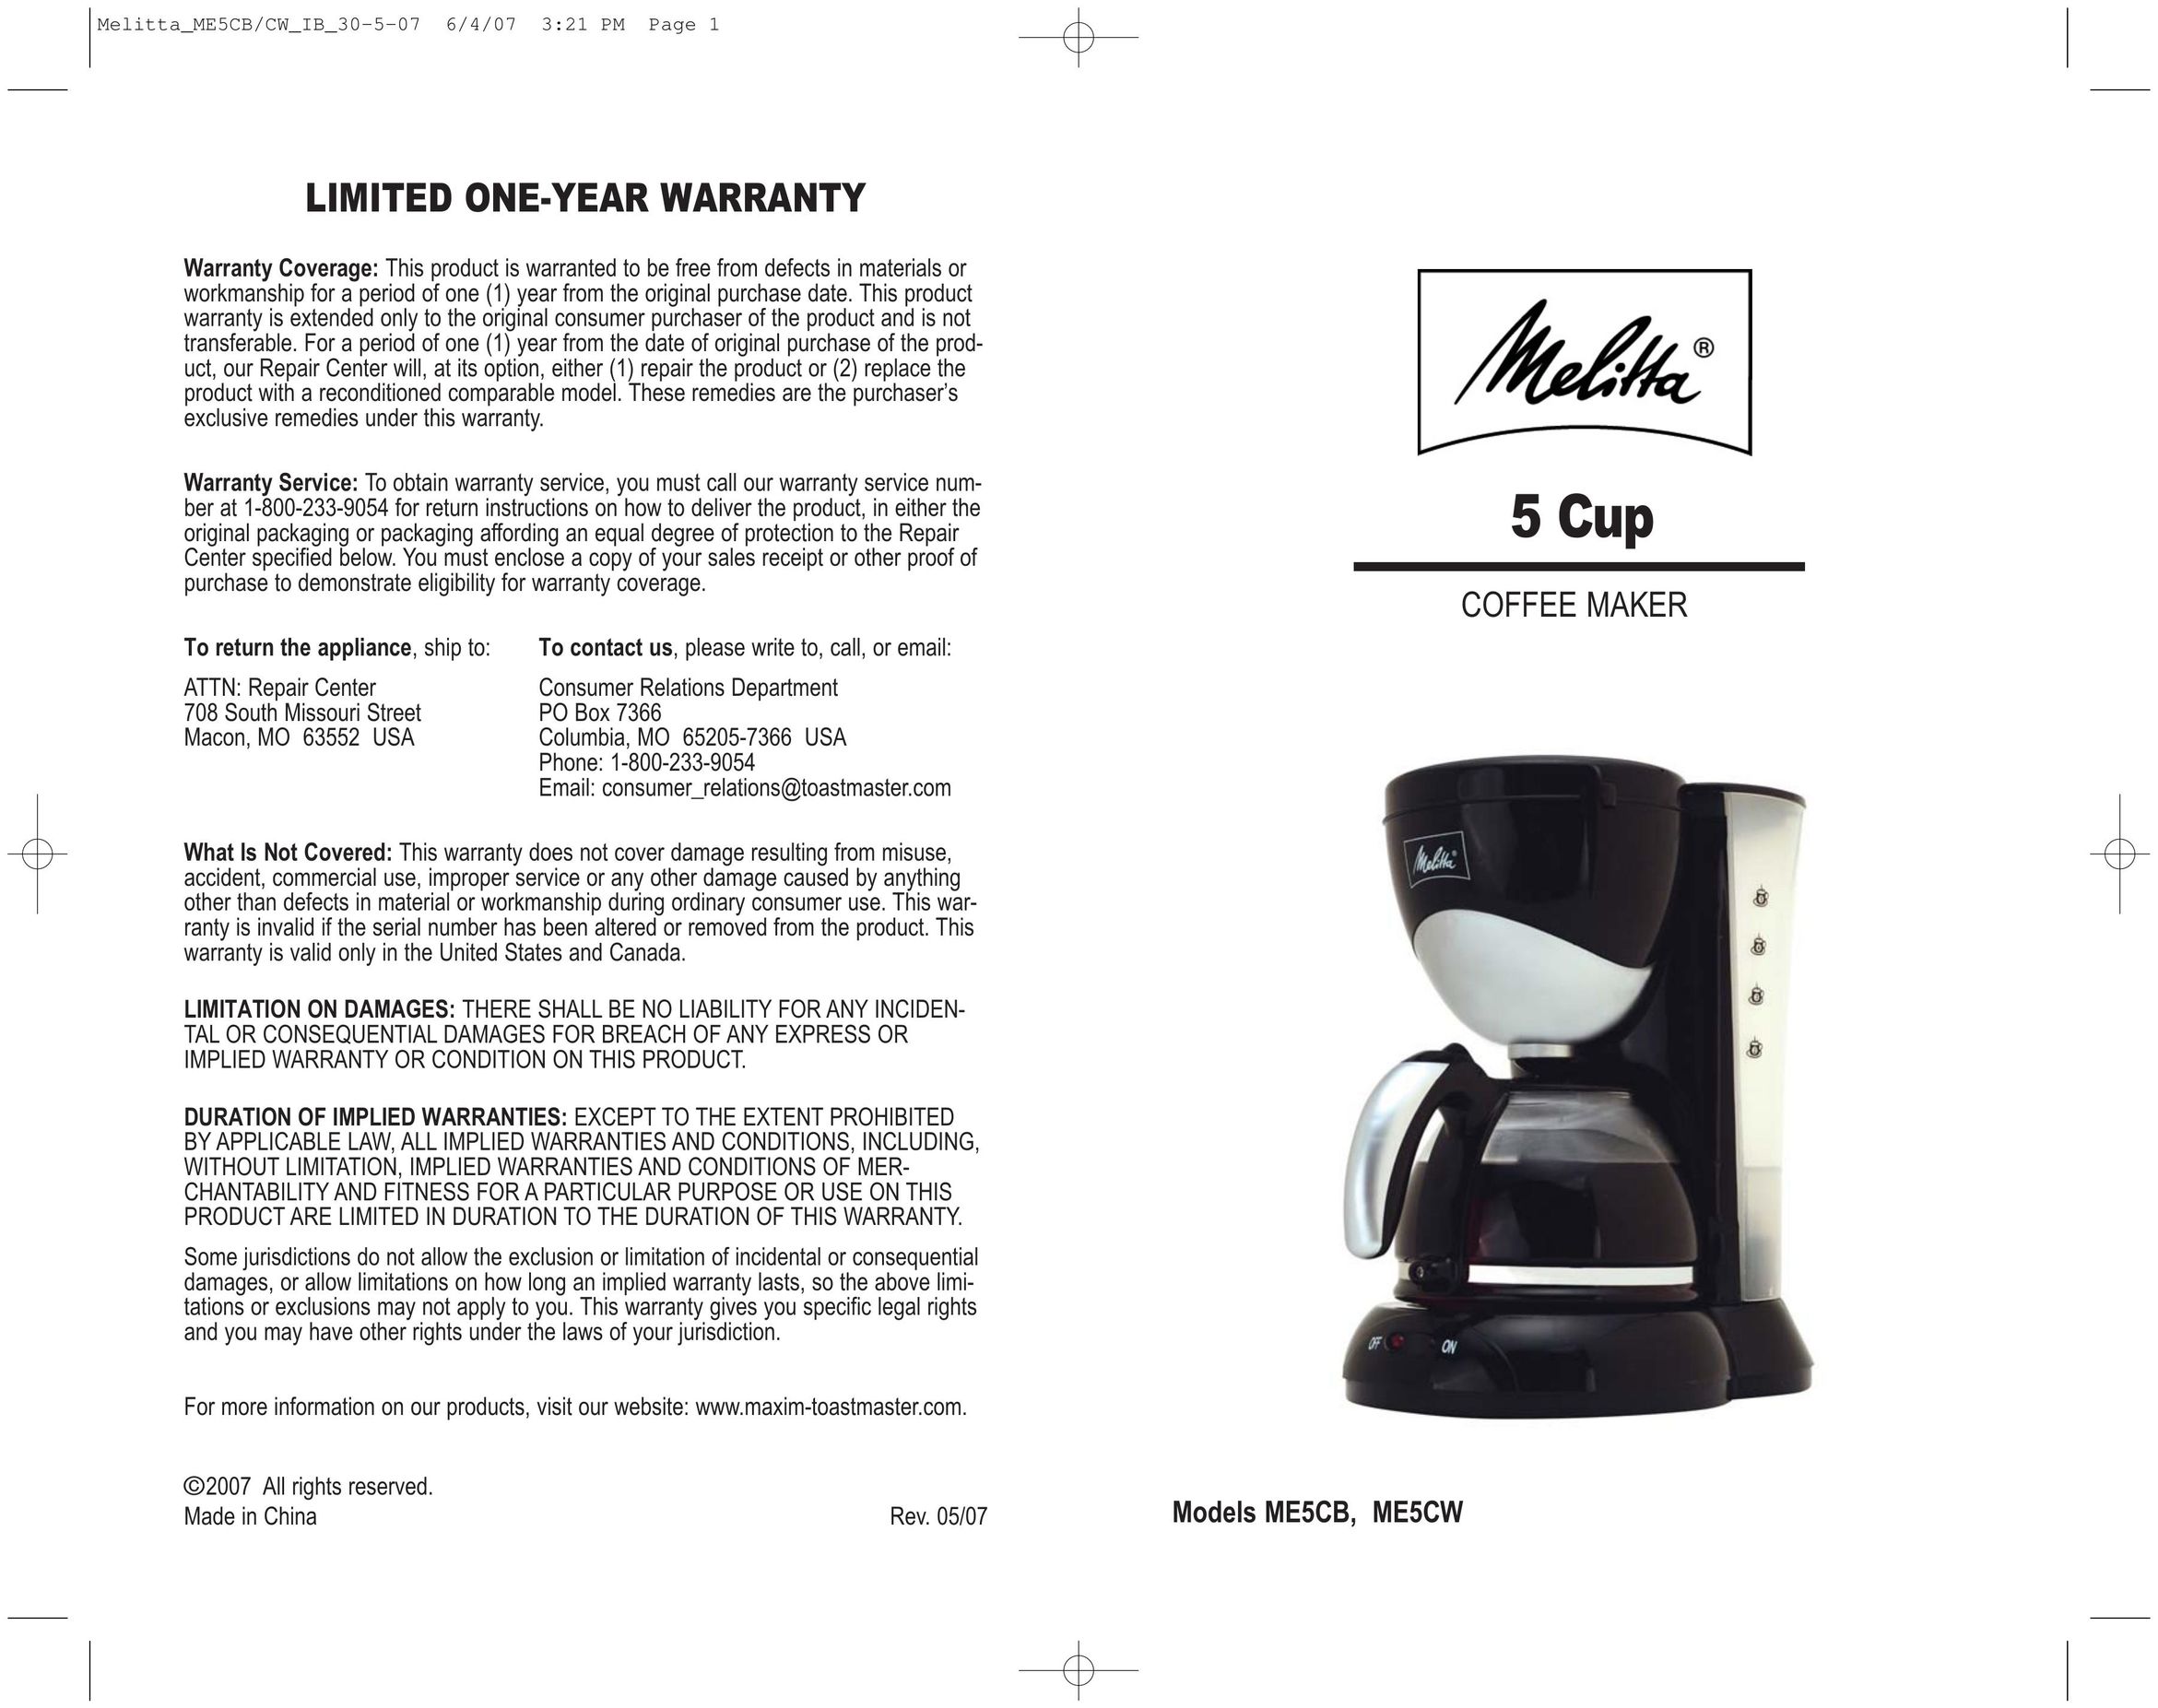 Toastmaster ME5CB Coffeemaker User Manual